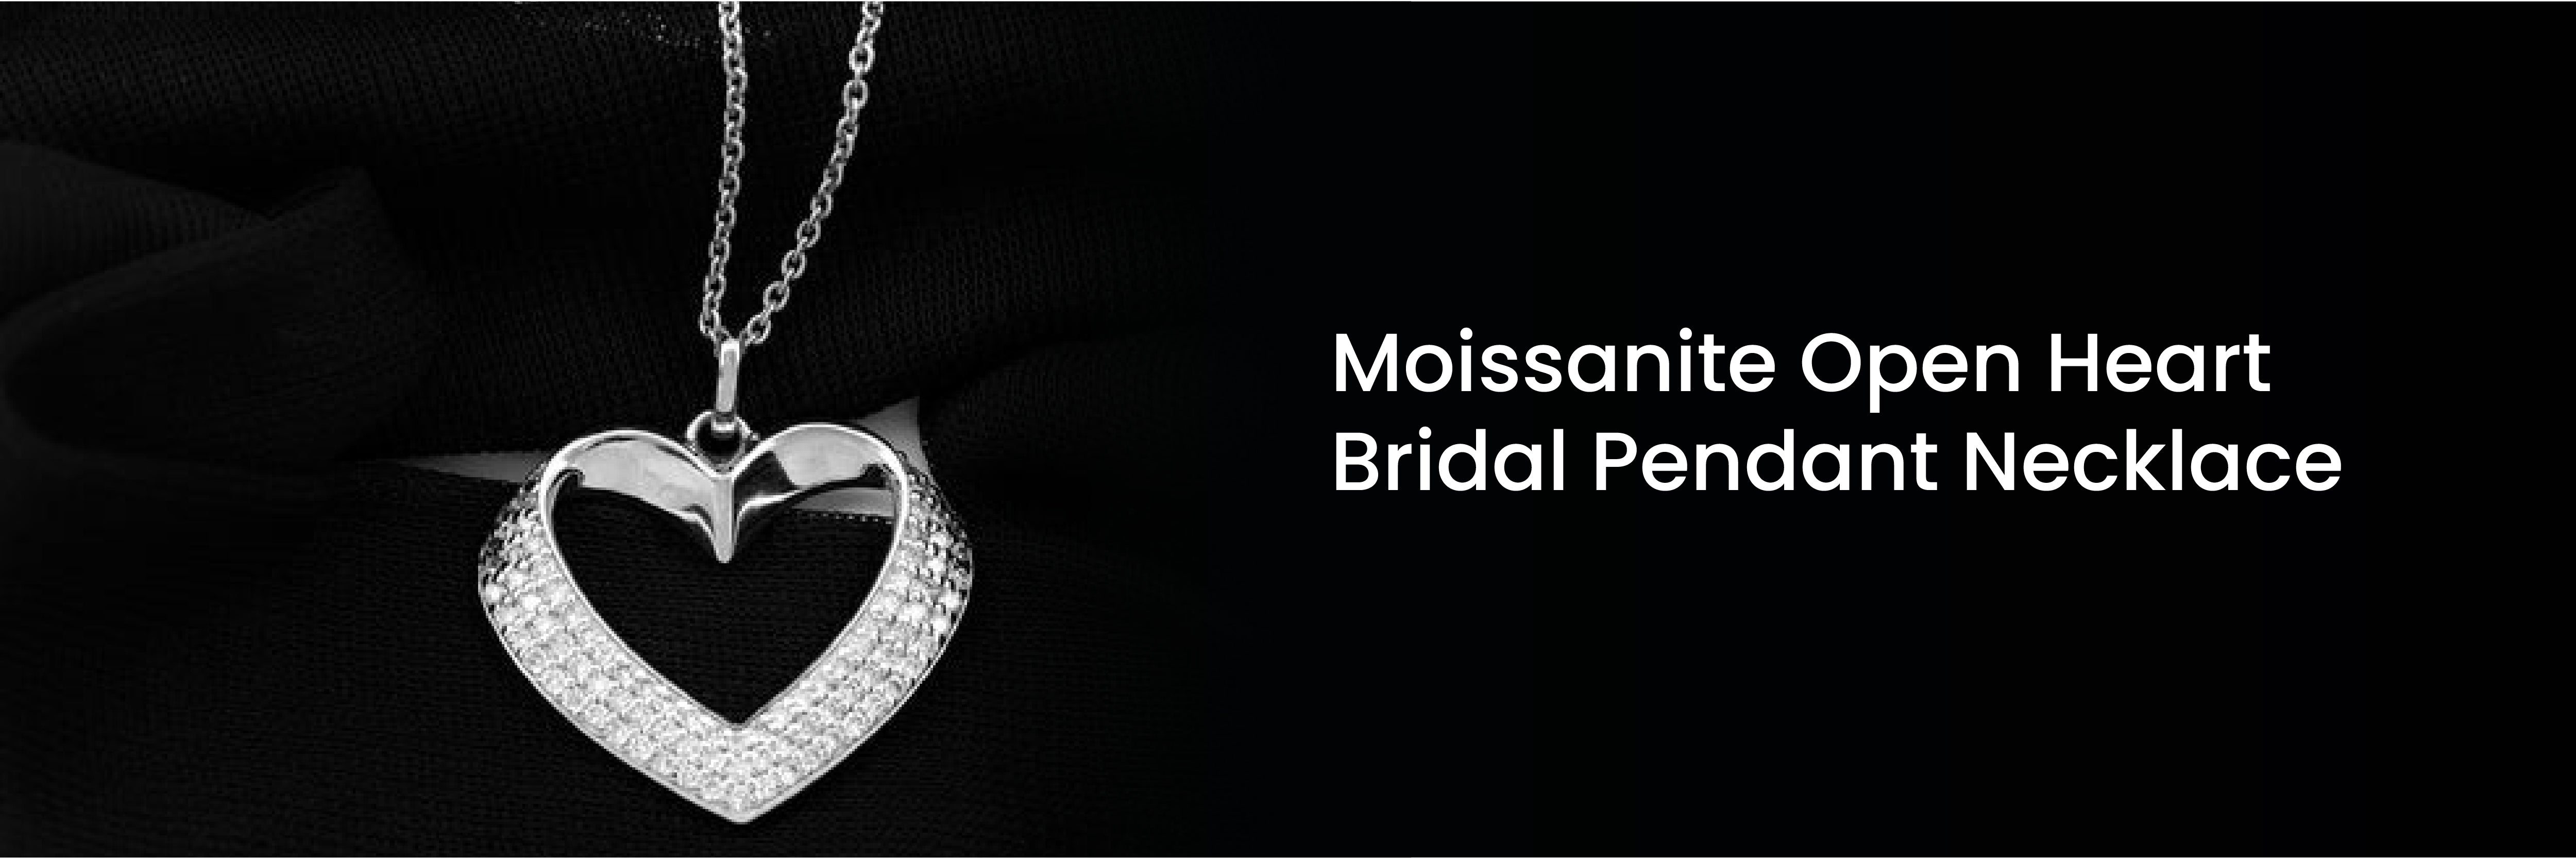 Moissanite Open Heart Bridal Pendant Necklace